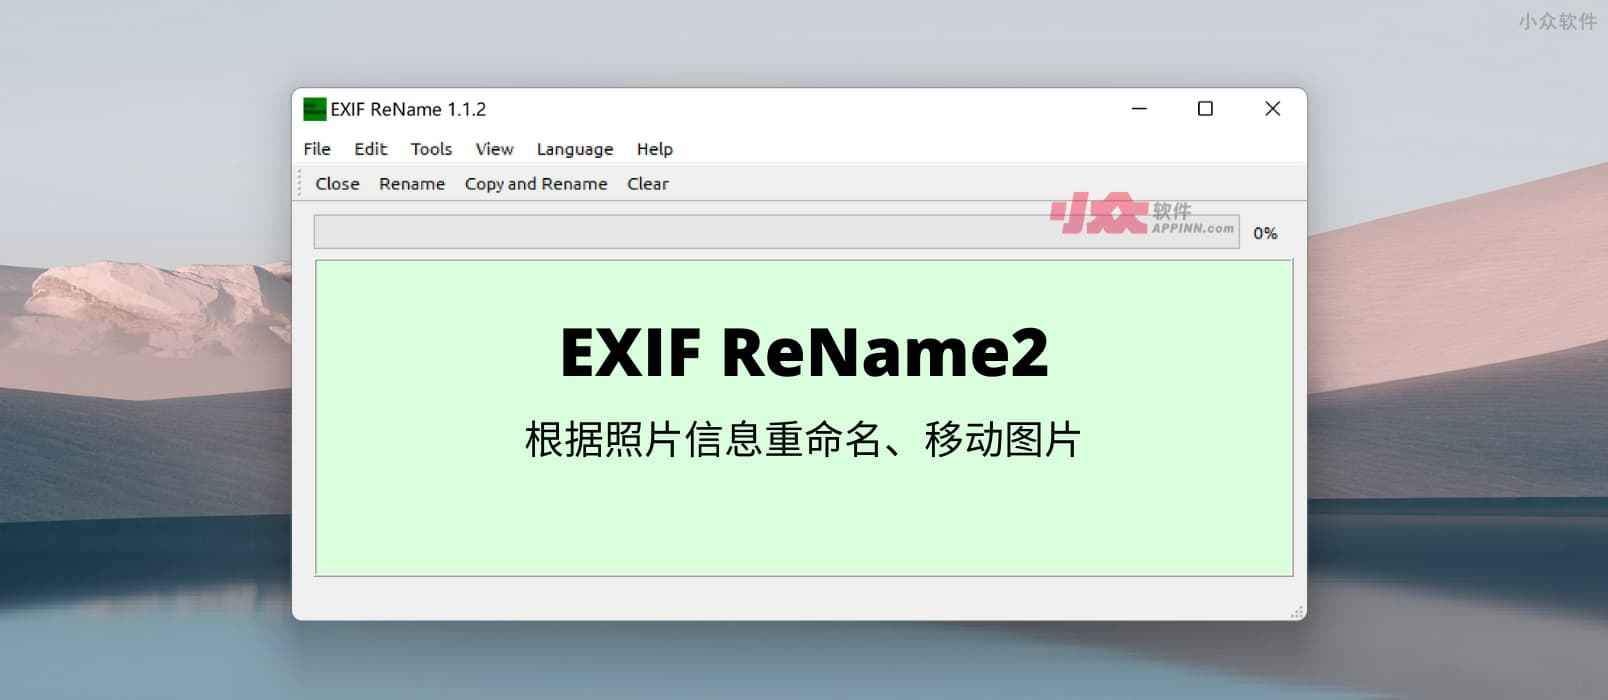 EXIF ReName 2 - 根据照片信息重命名、复制图片[Windows/Linux]